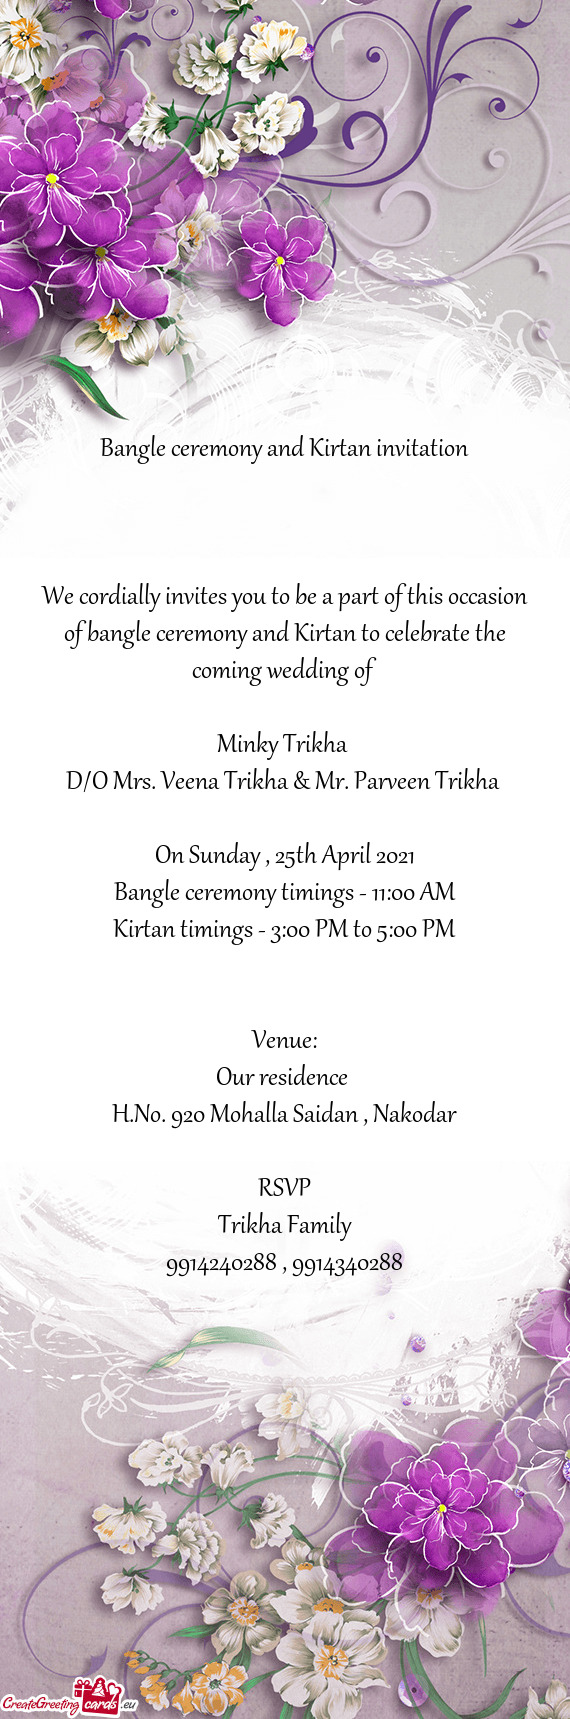 Bangle ceremony and Kirtan invitation